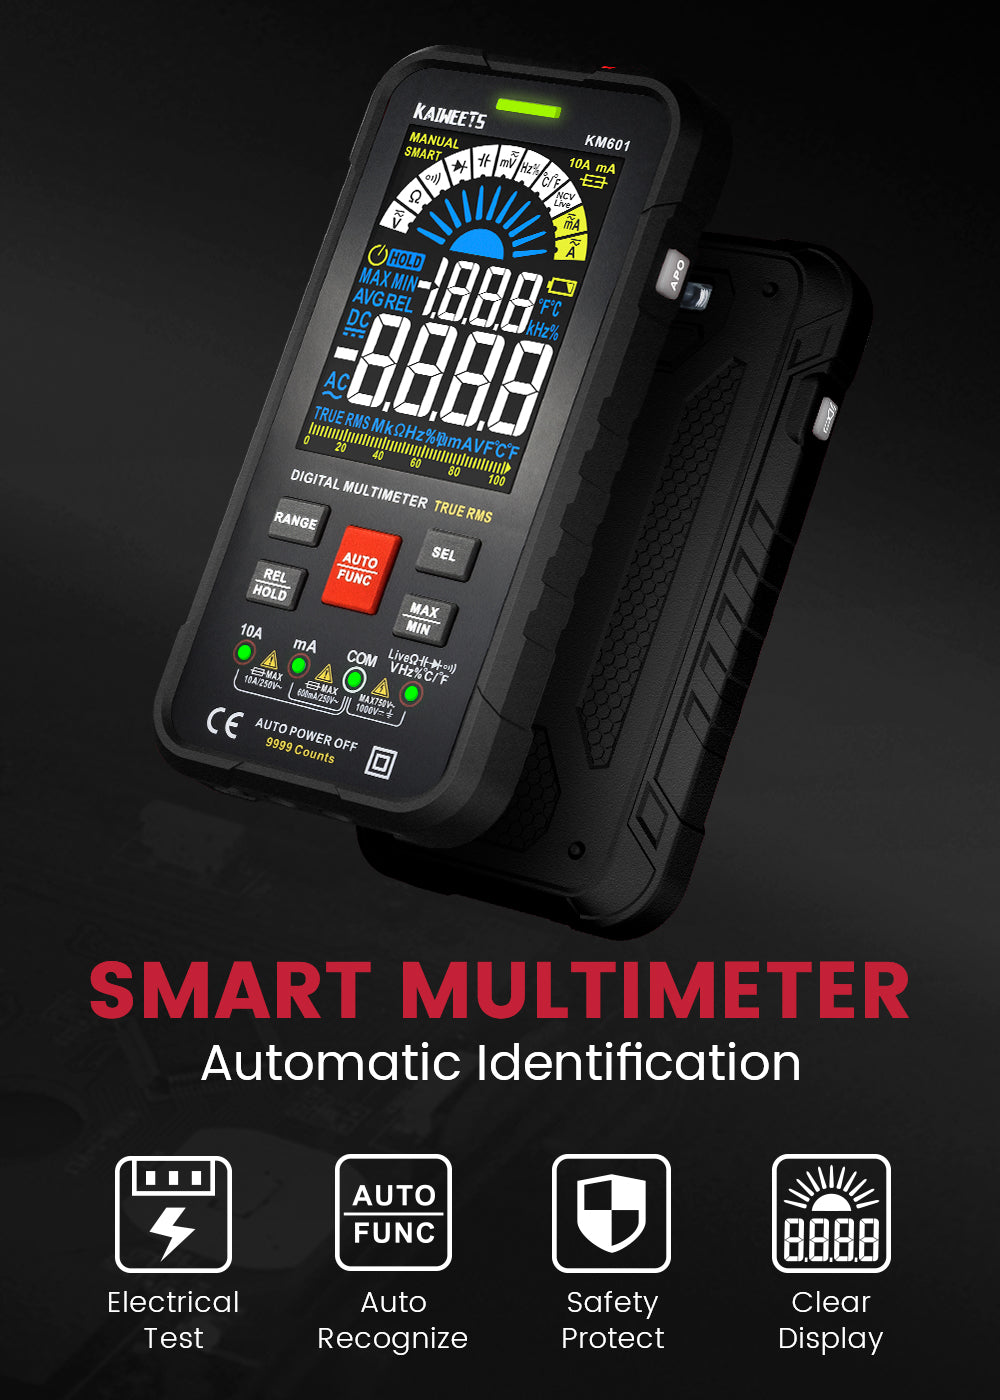 KAIWEETS KM601 Smart Digital Multimeter - 10000 Counts True-RMS